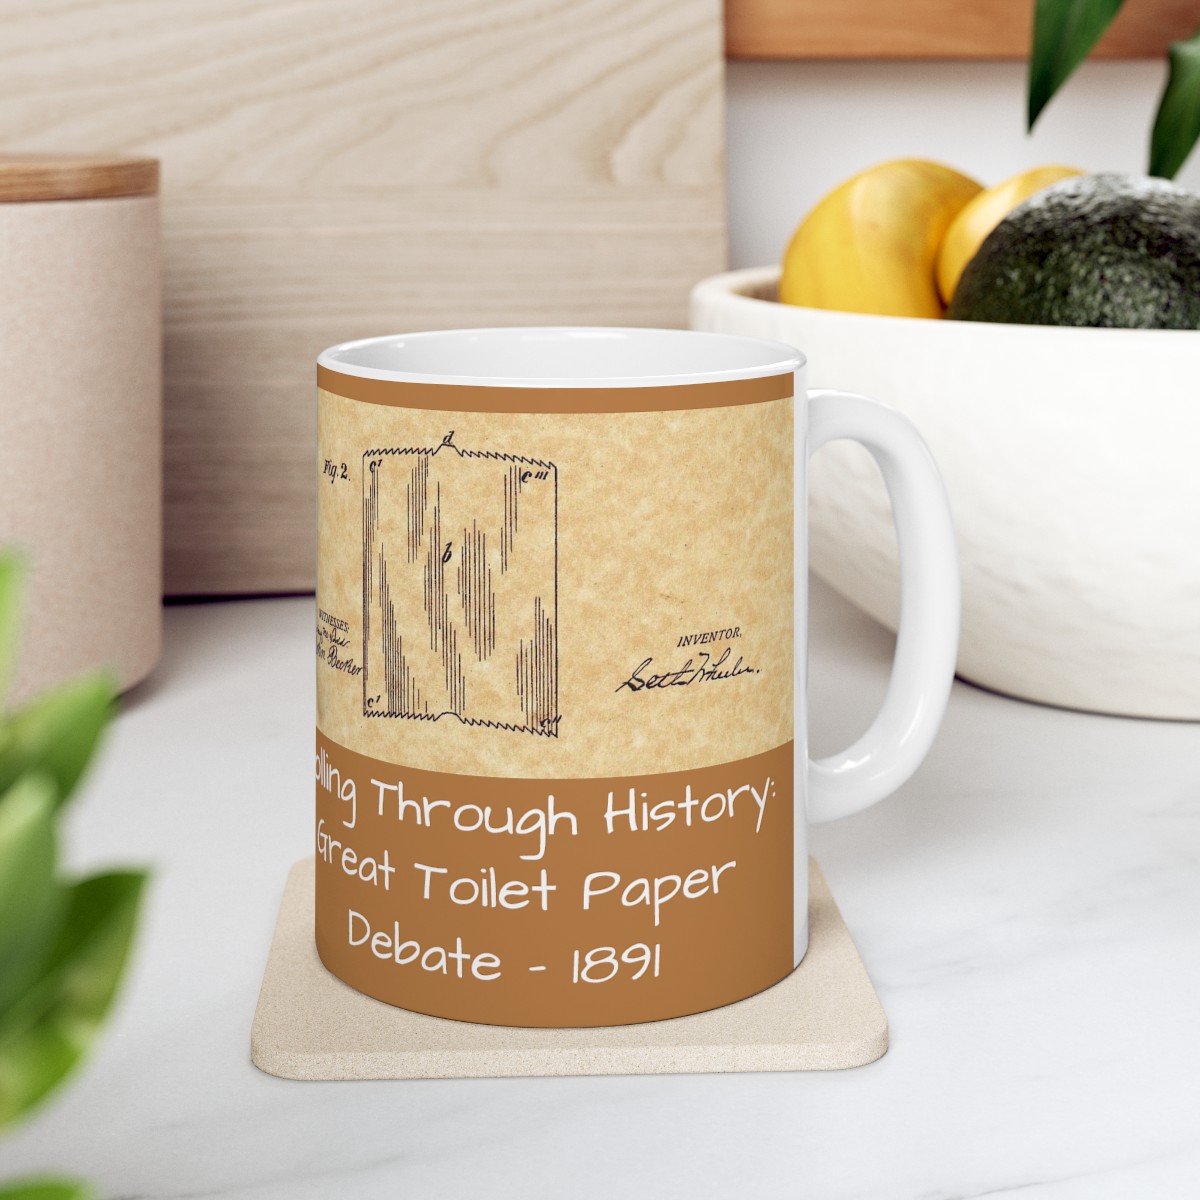 History Buff Gift - U.S. Toilet Paper Patent Mug - Rolling Through History: 1891 Great Toilet Paper Debate - Ceramic Mug 11oz product thumbnail image